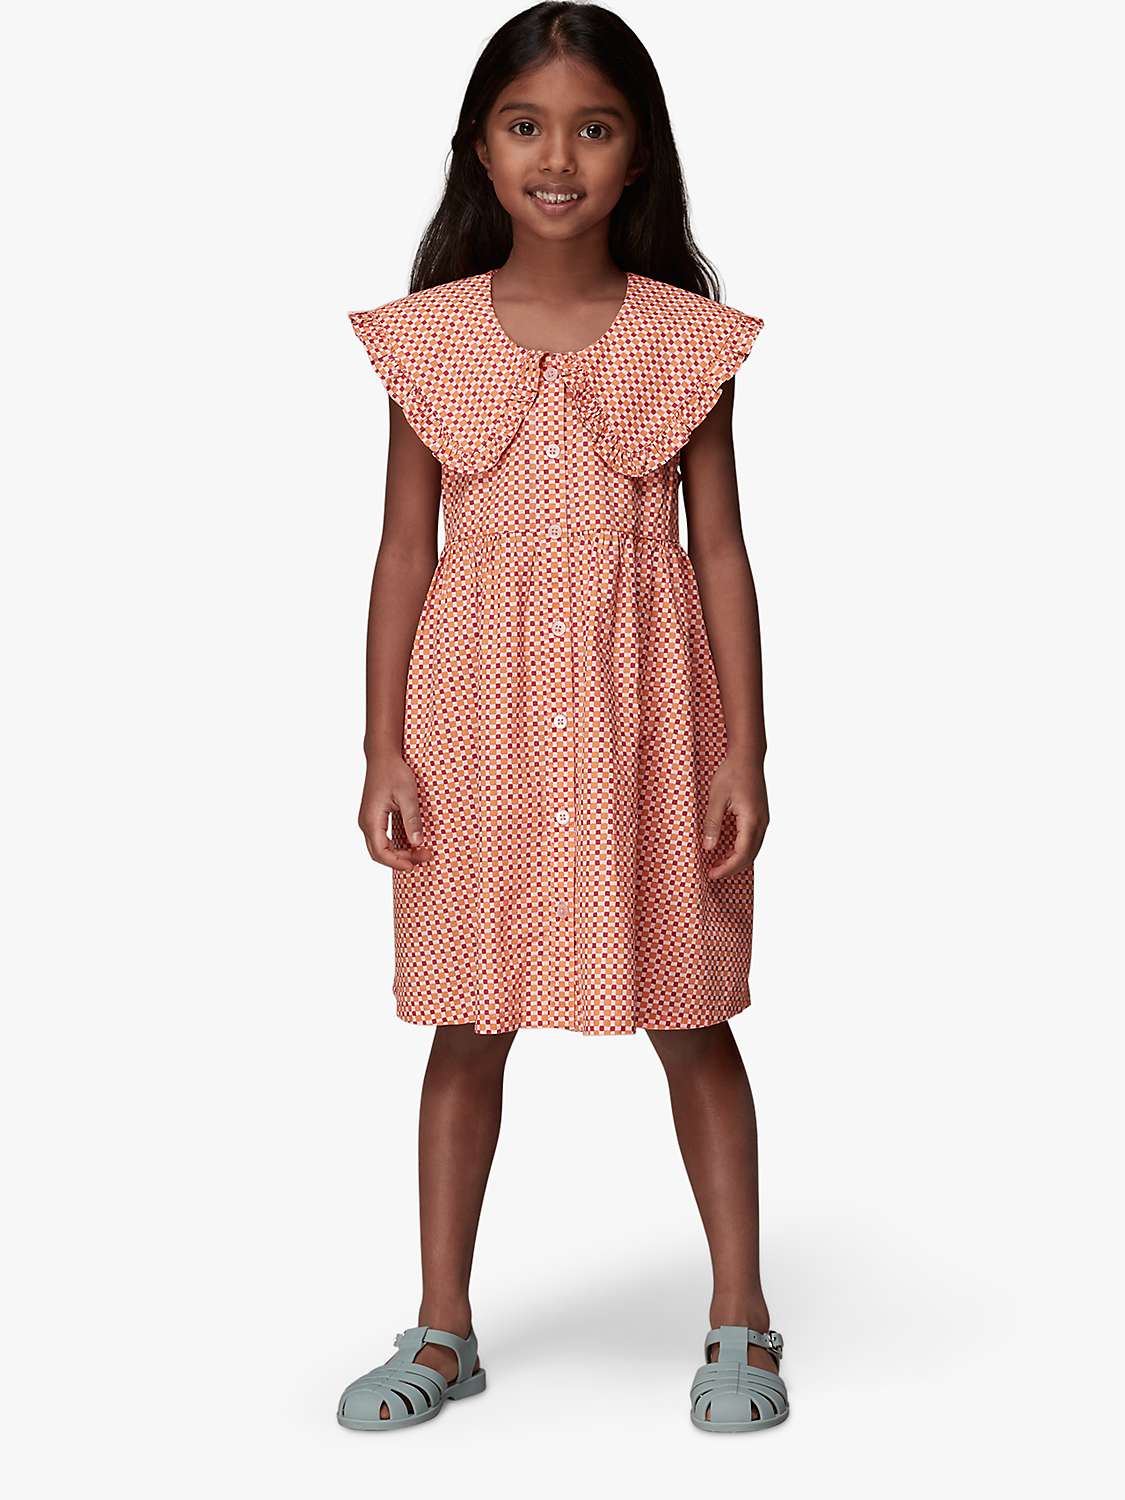 Buy Whistles Kids' Nova Cotton Ditsy Square Peter-Pan Collar Dress, Pink/Multi Online at johnlewis.com